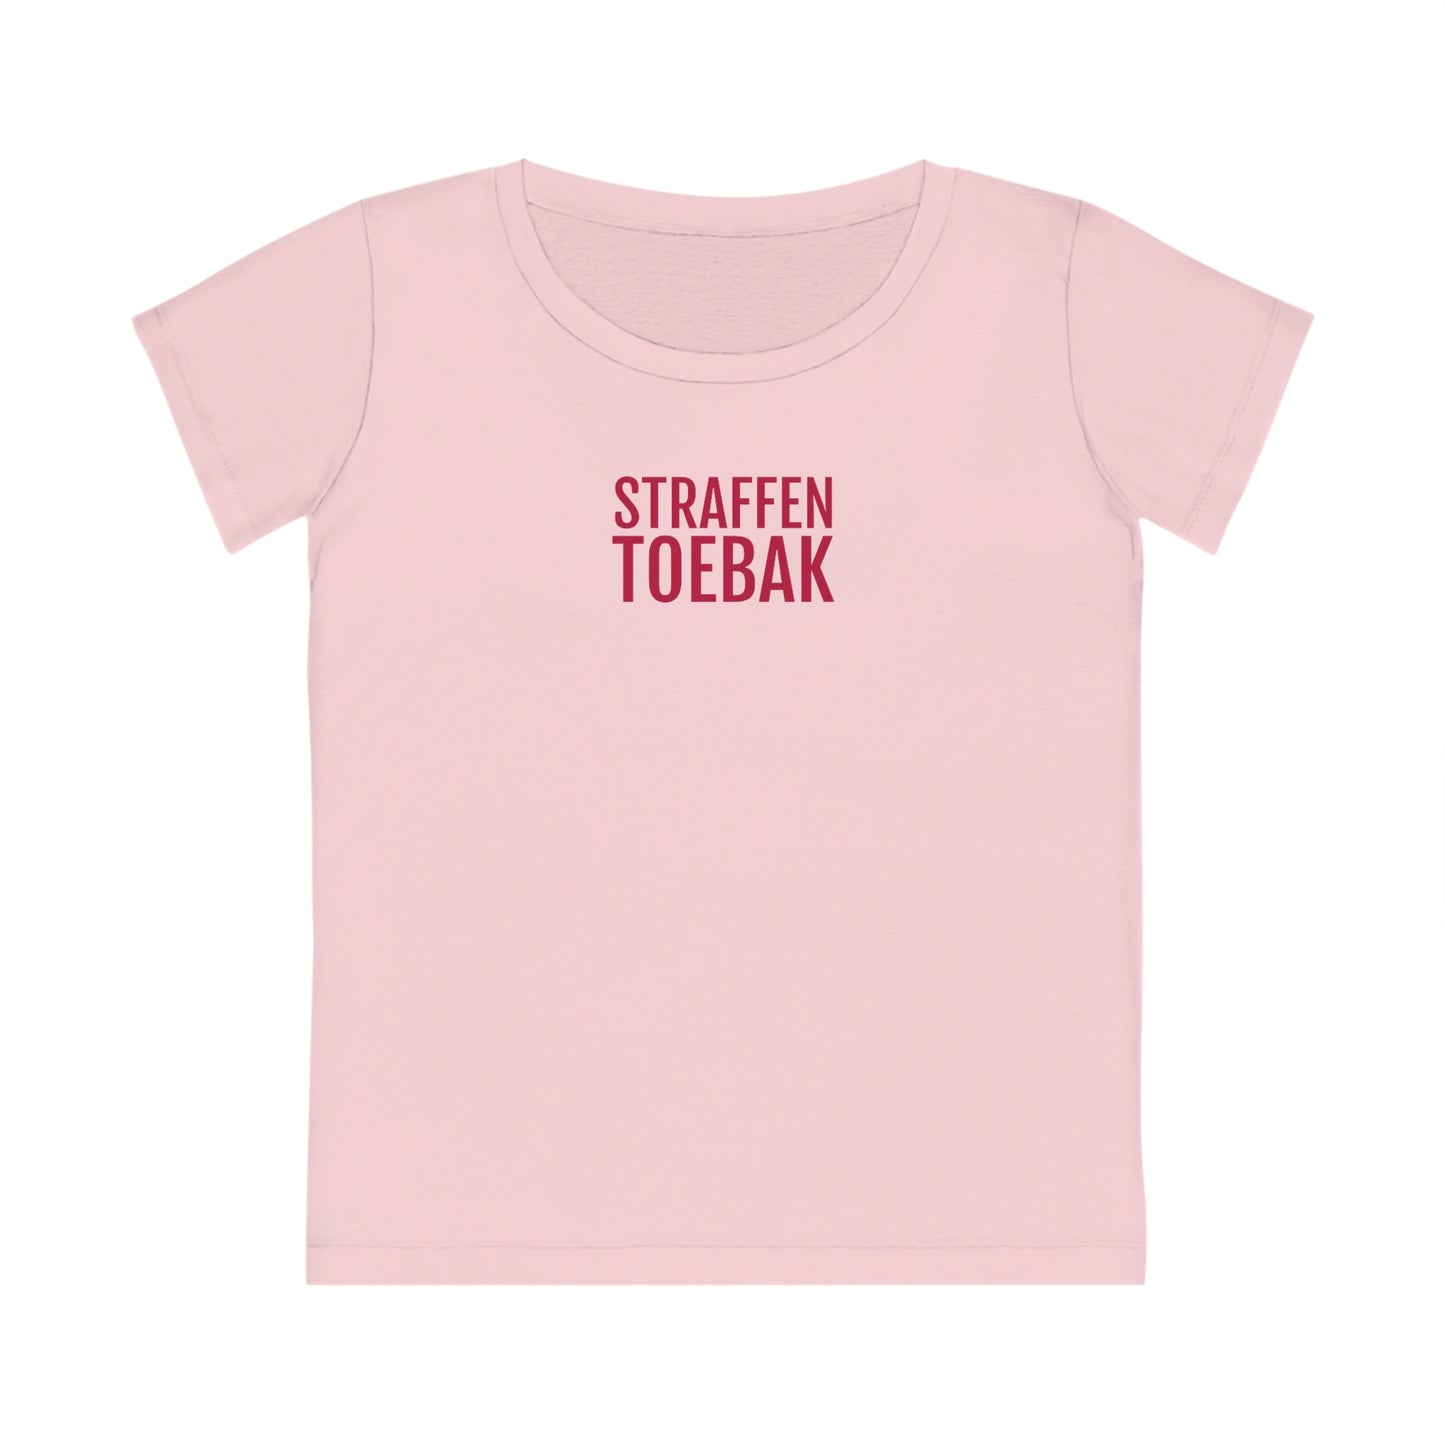 STRAFFEN TOEBAK | Dames T-Shirt uit Antwerpen